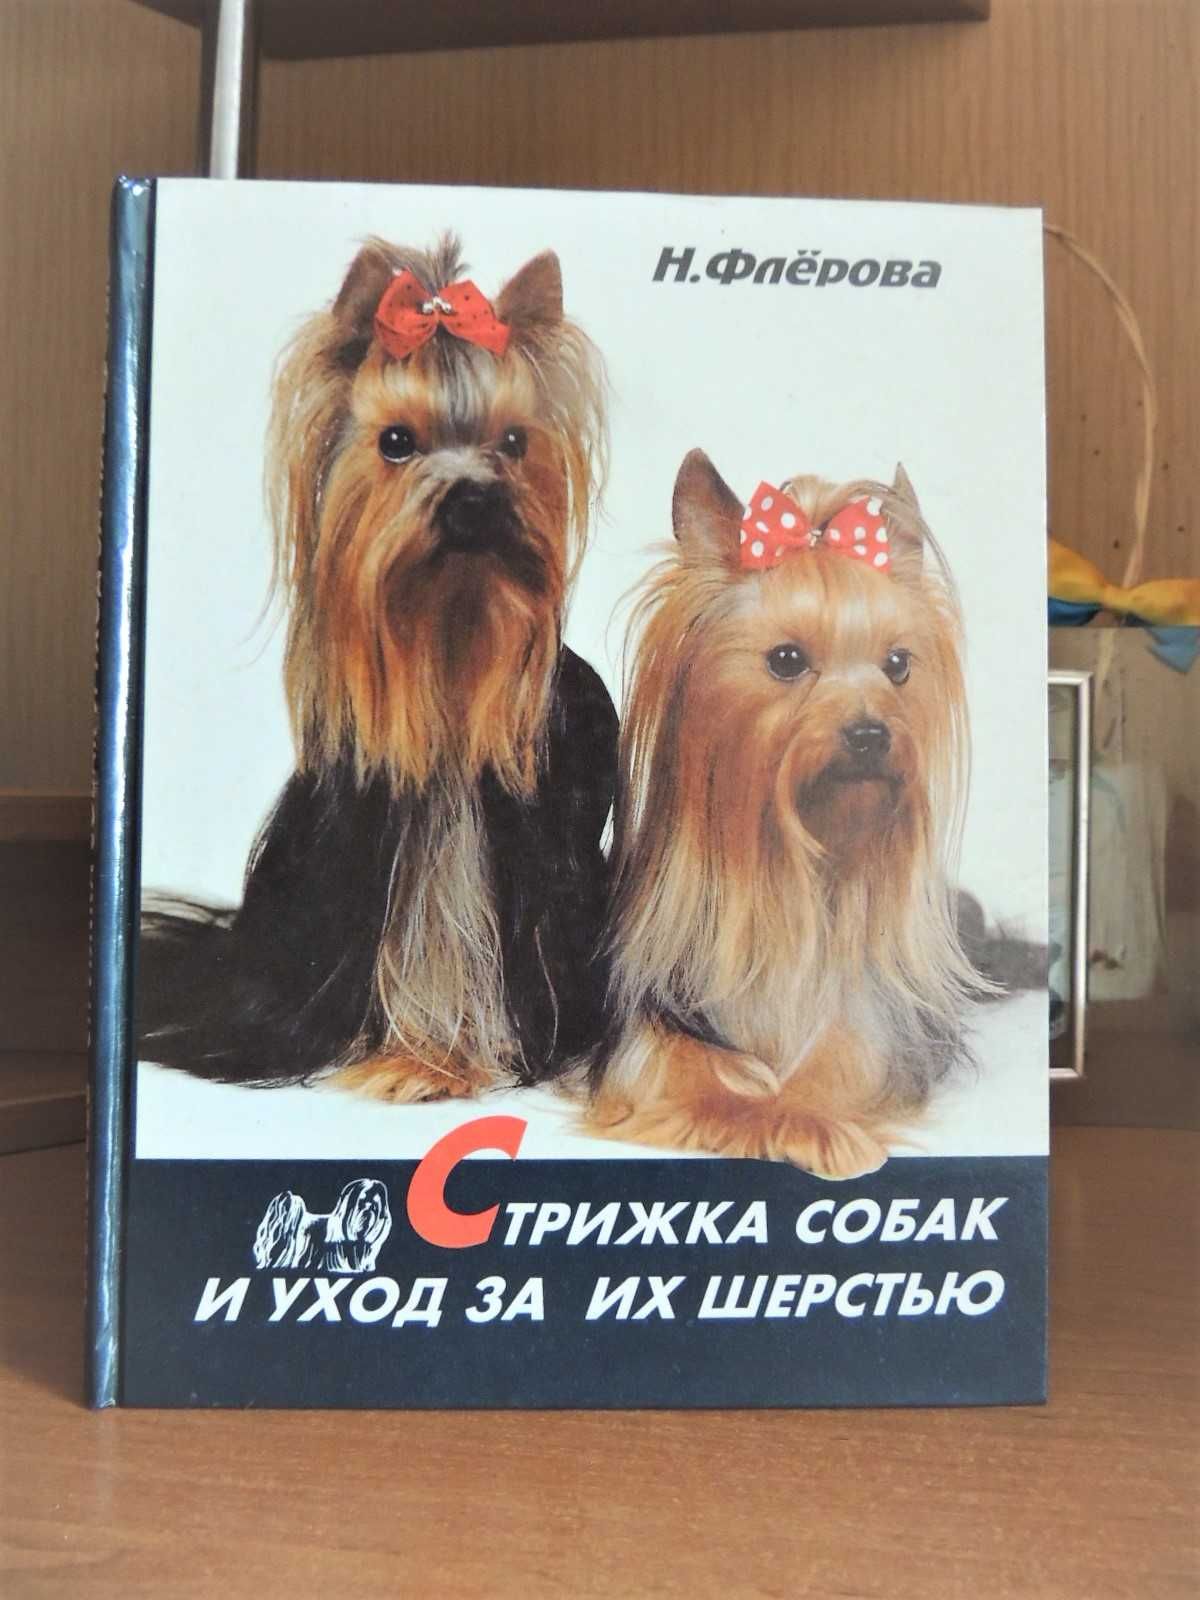 Книга "Стрижка собак и уход за шерстью" Н.Флёрова